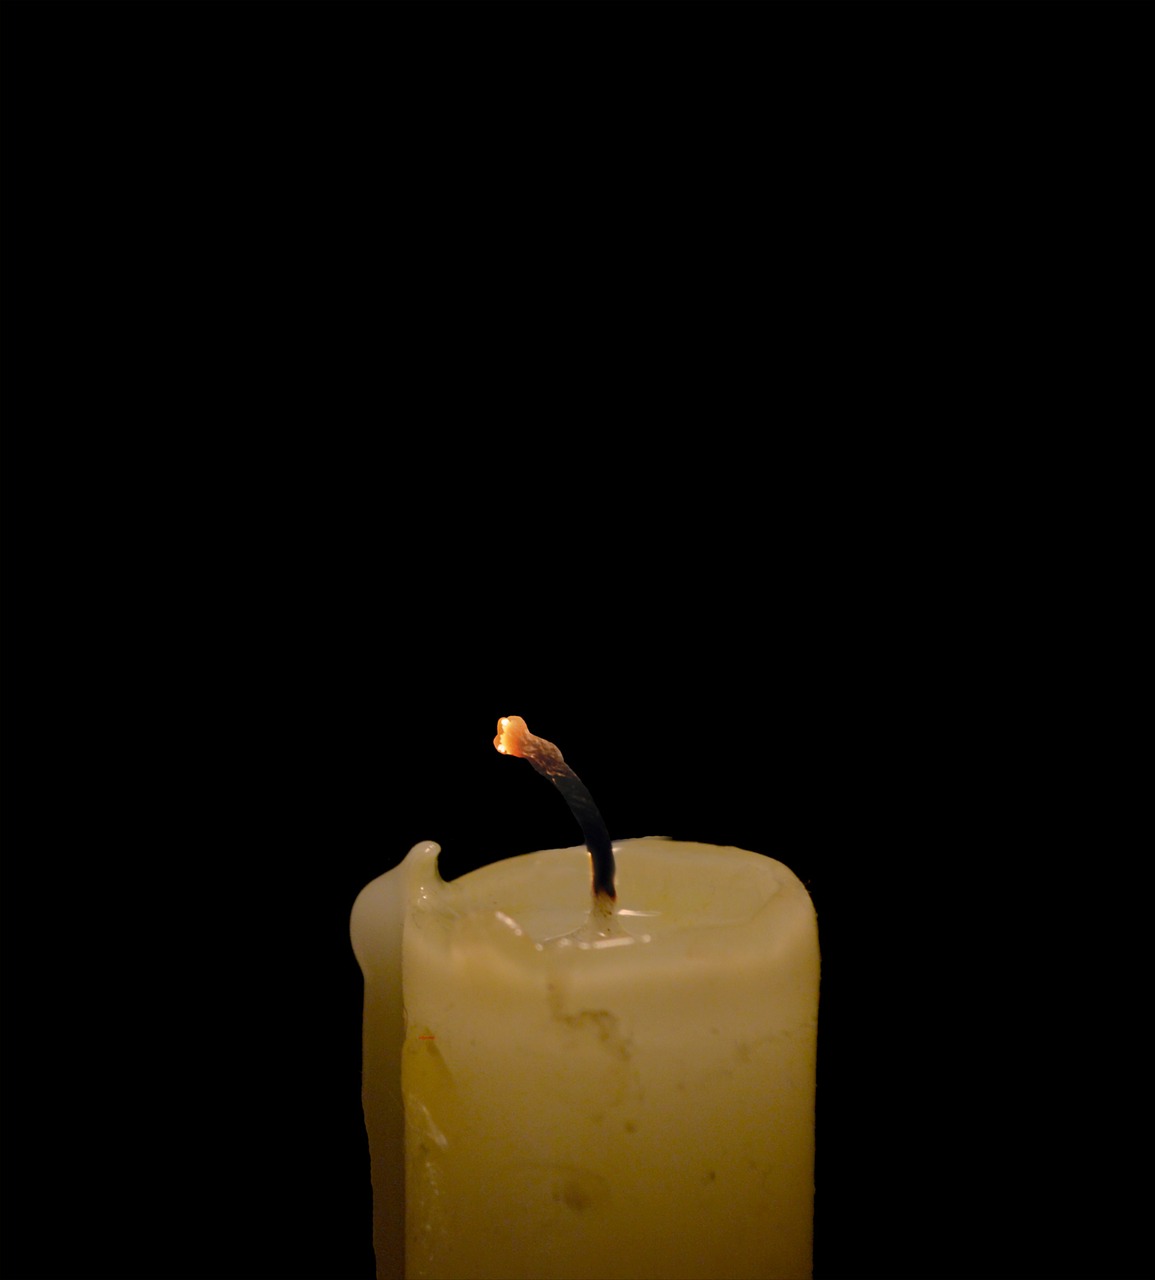 fire light wax candle free photo